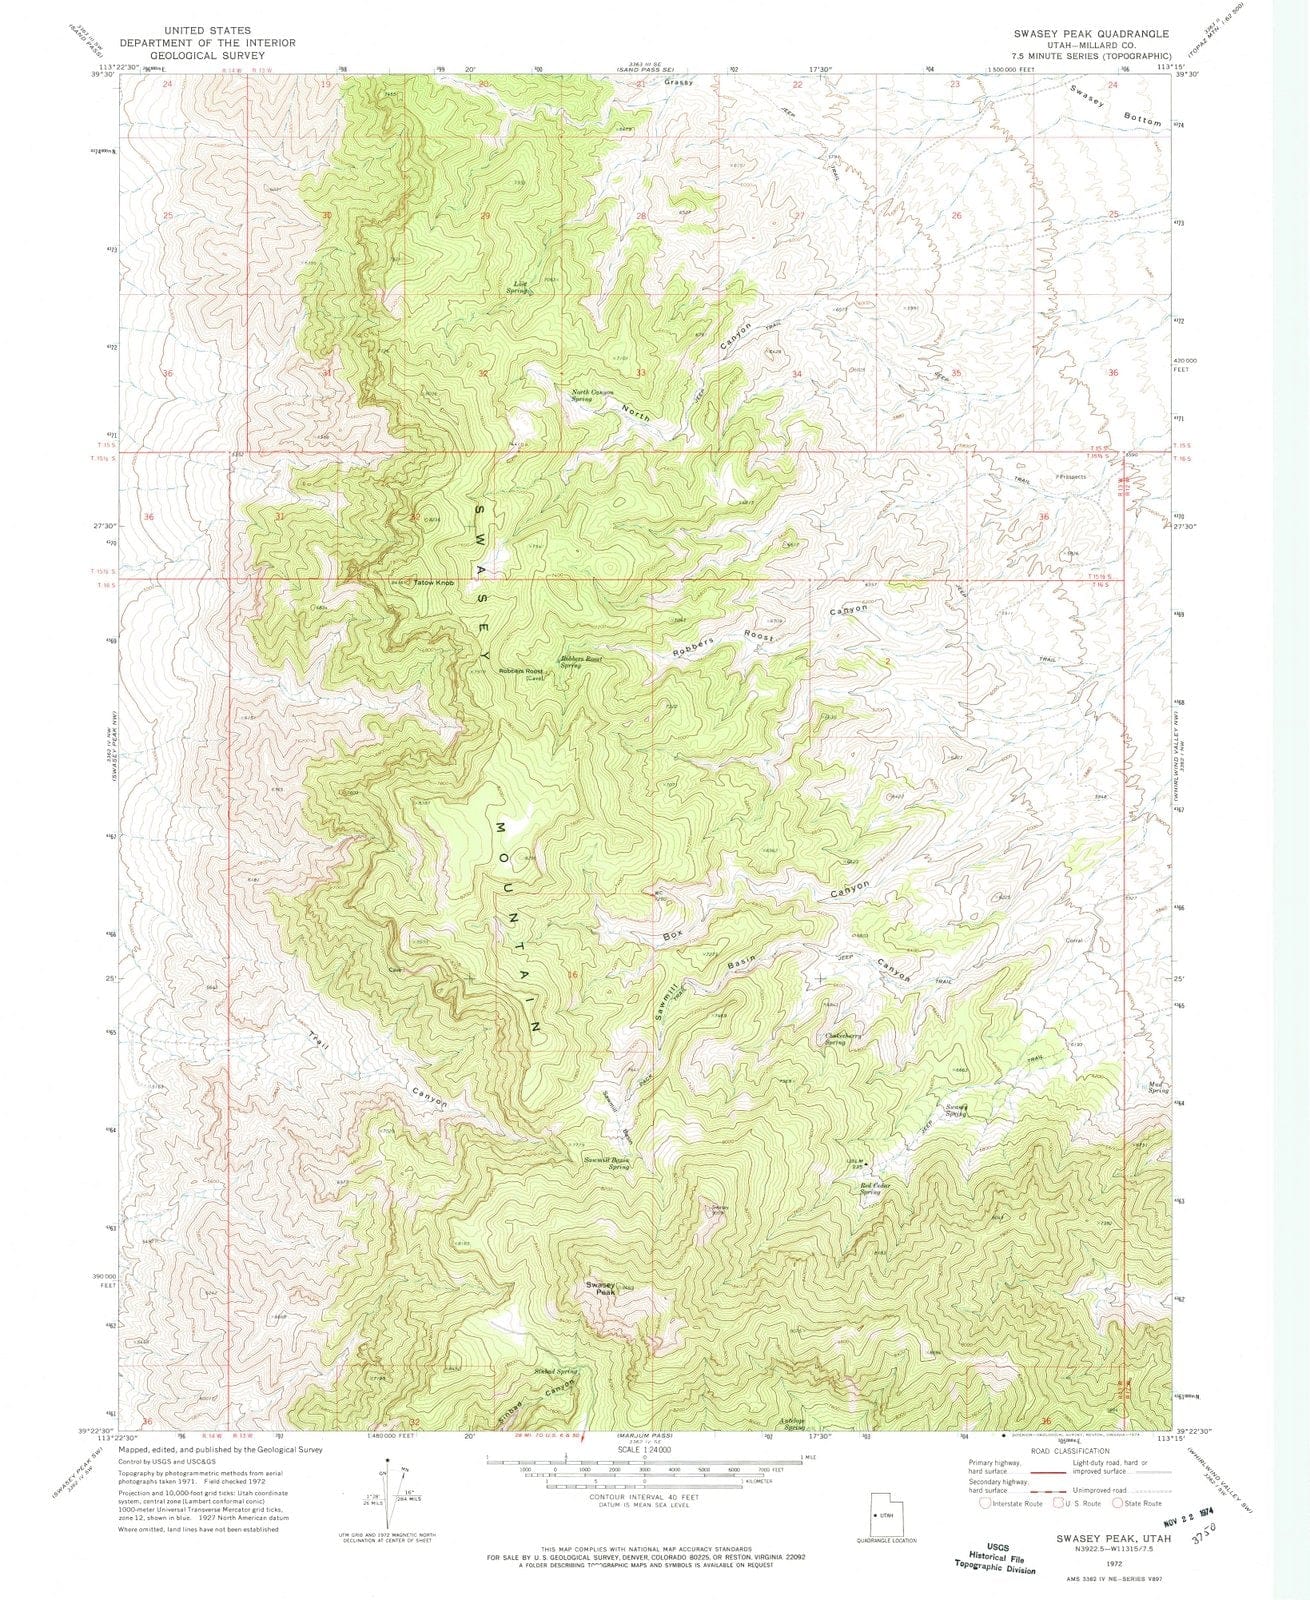 1972 Swasey Peak, UT - Utah - USGS Topographic Map v3